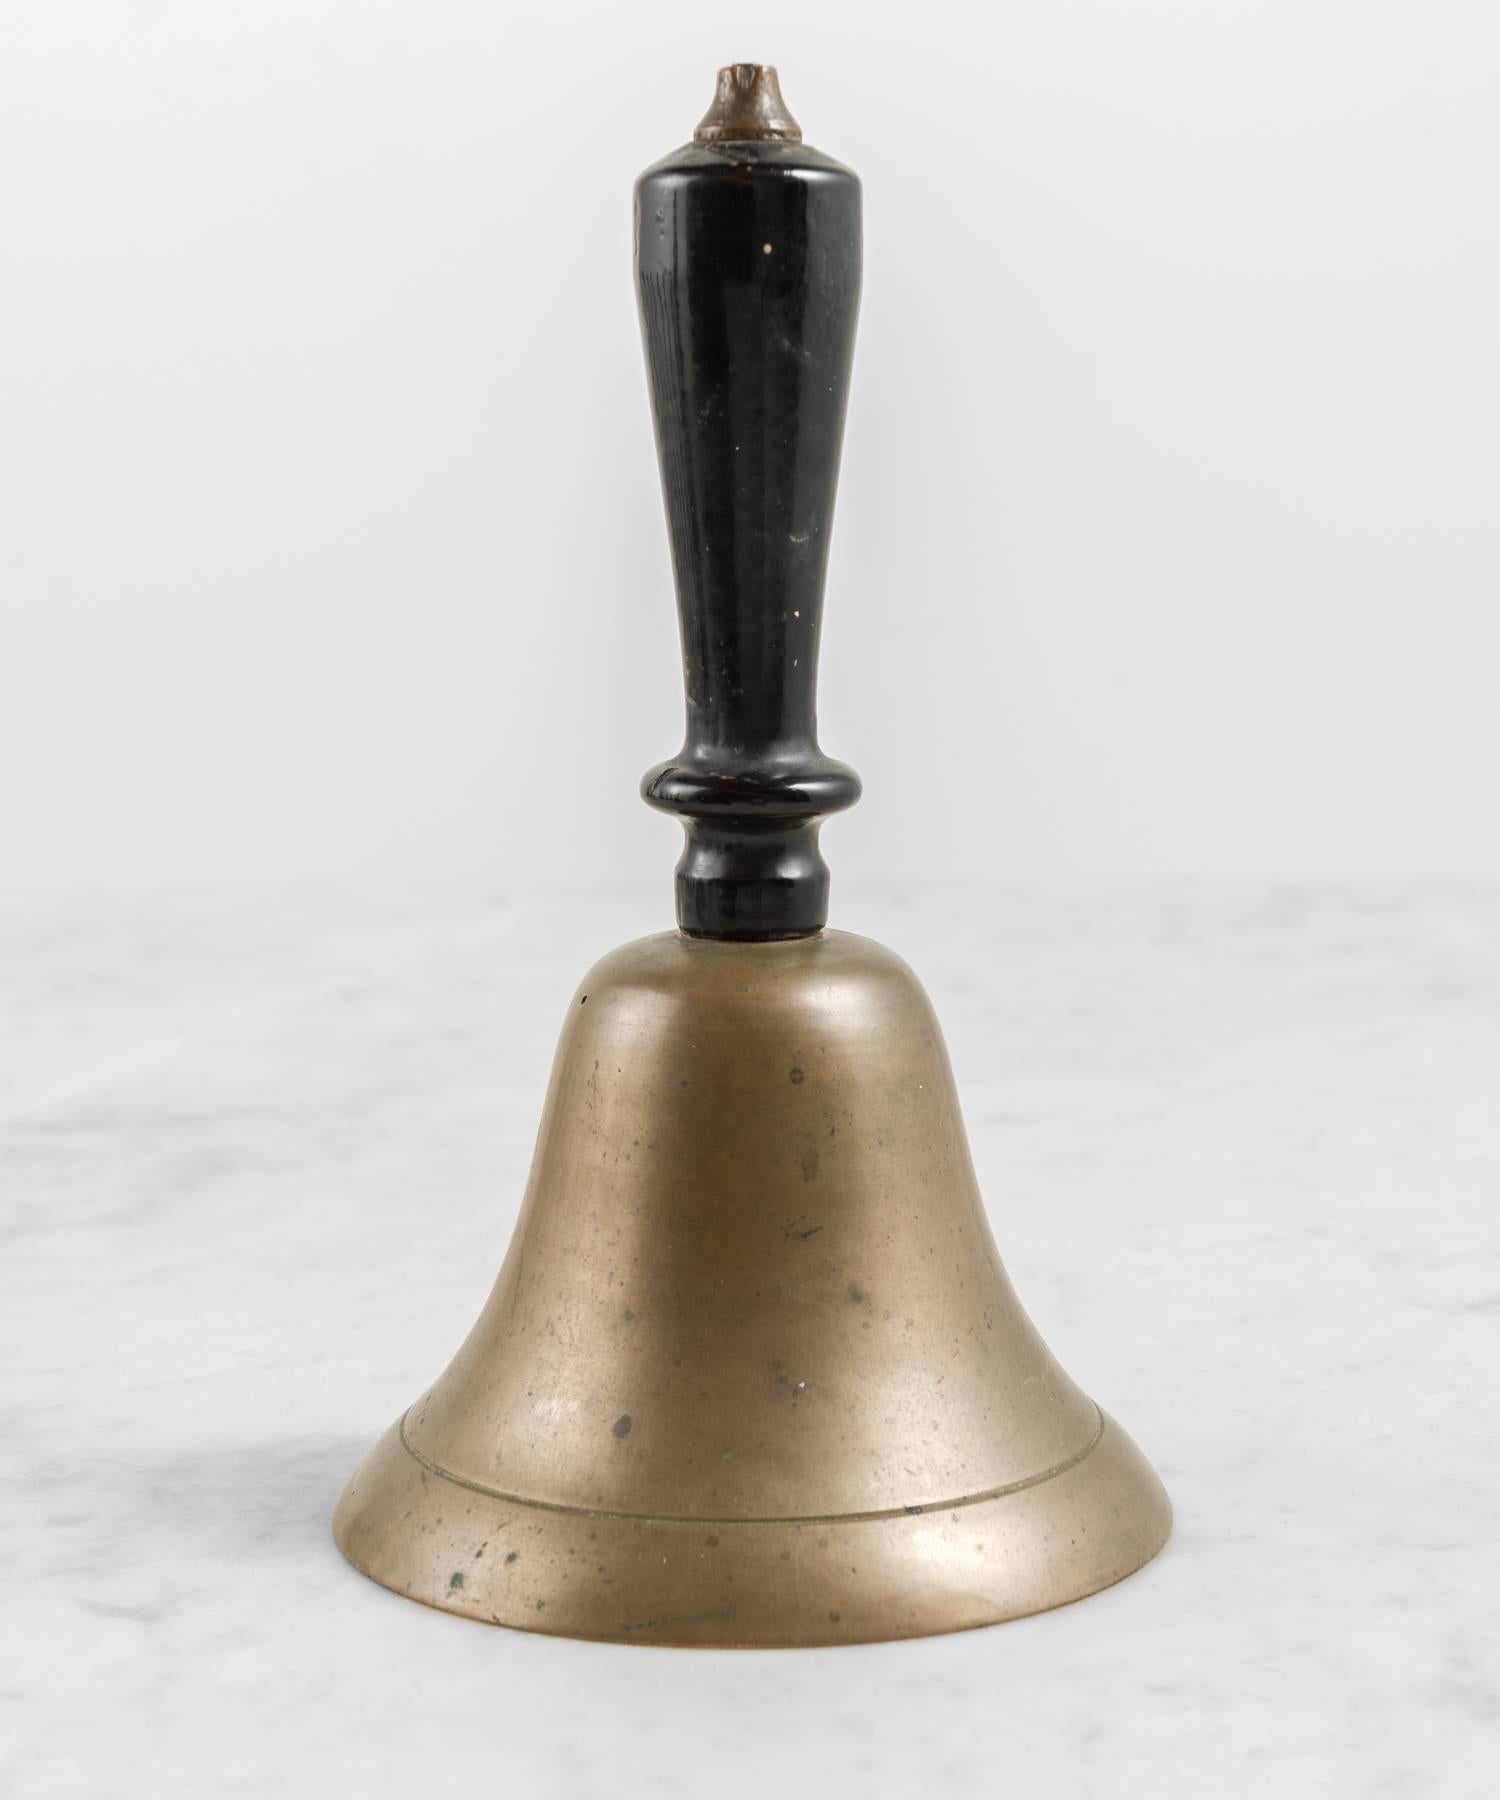 Ebonized Medium Sized Bell with Wooden Handle, circa 1900-1940